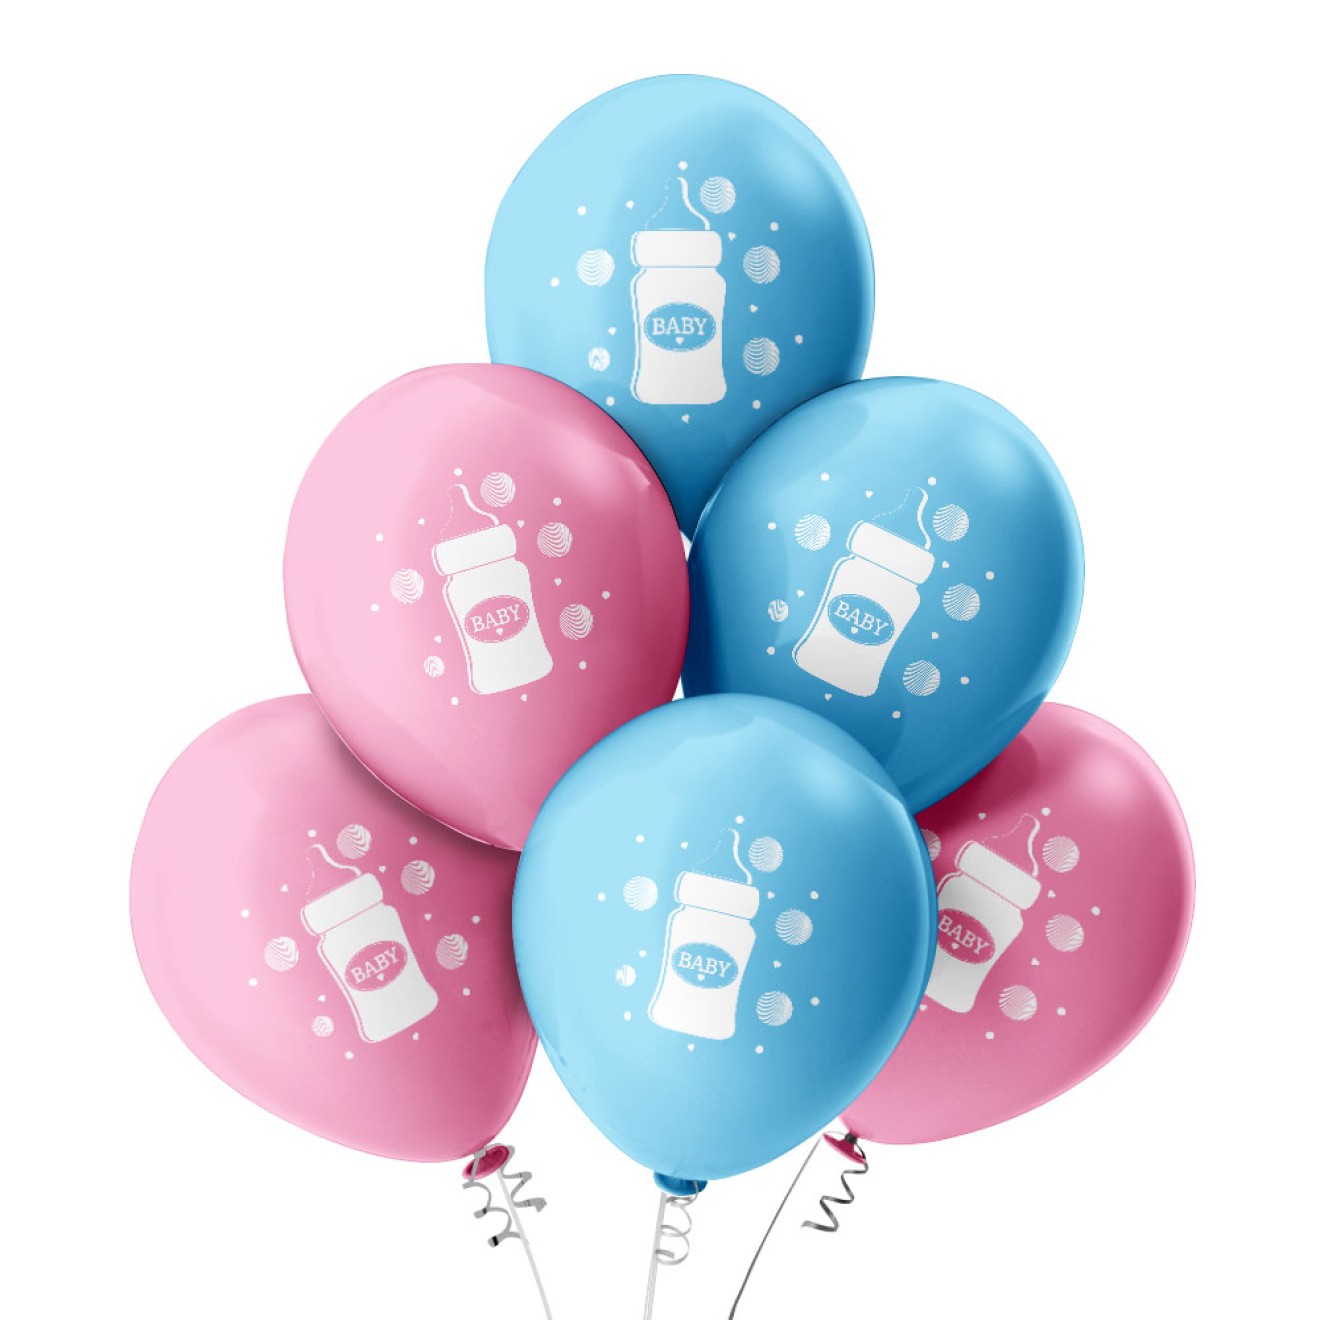 6 Luftballons Baby Flasche - Freie Farbauswahl